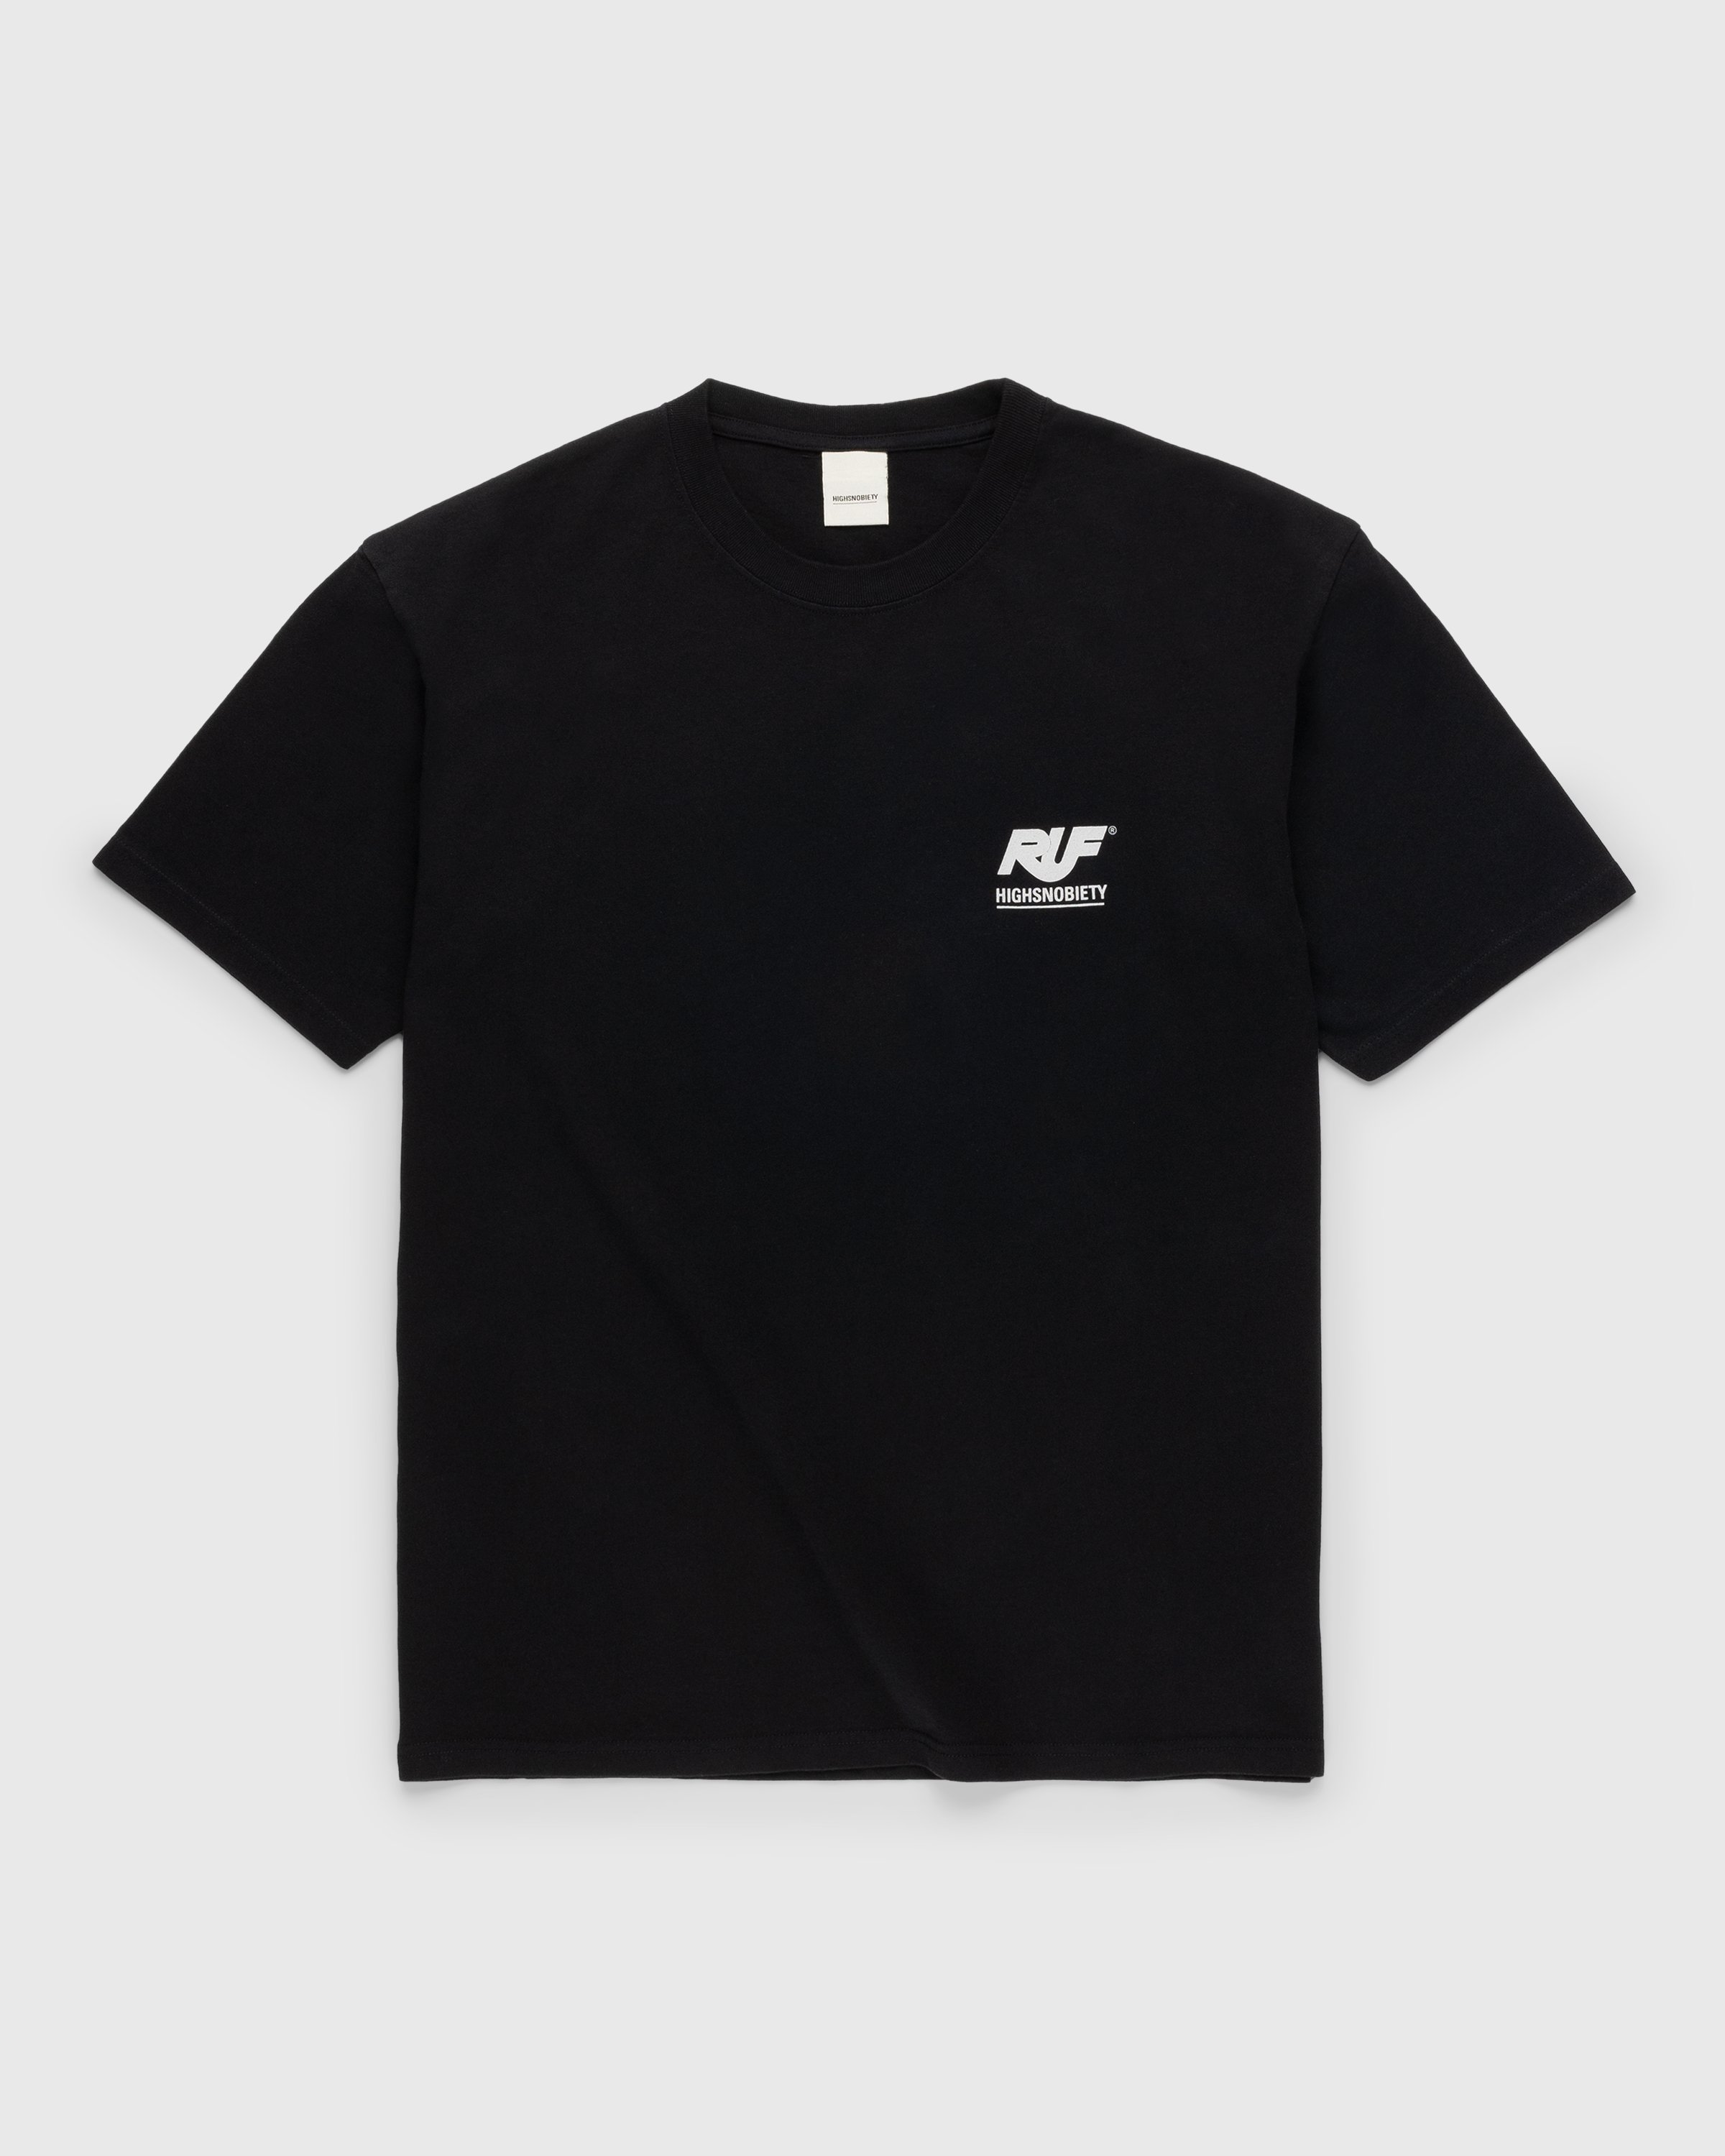 RUF x Highsnobiety - Wheel T-Shirt Black - Clothing - Black - Image 2